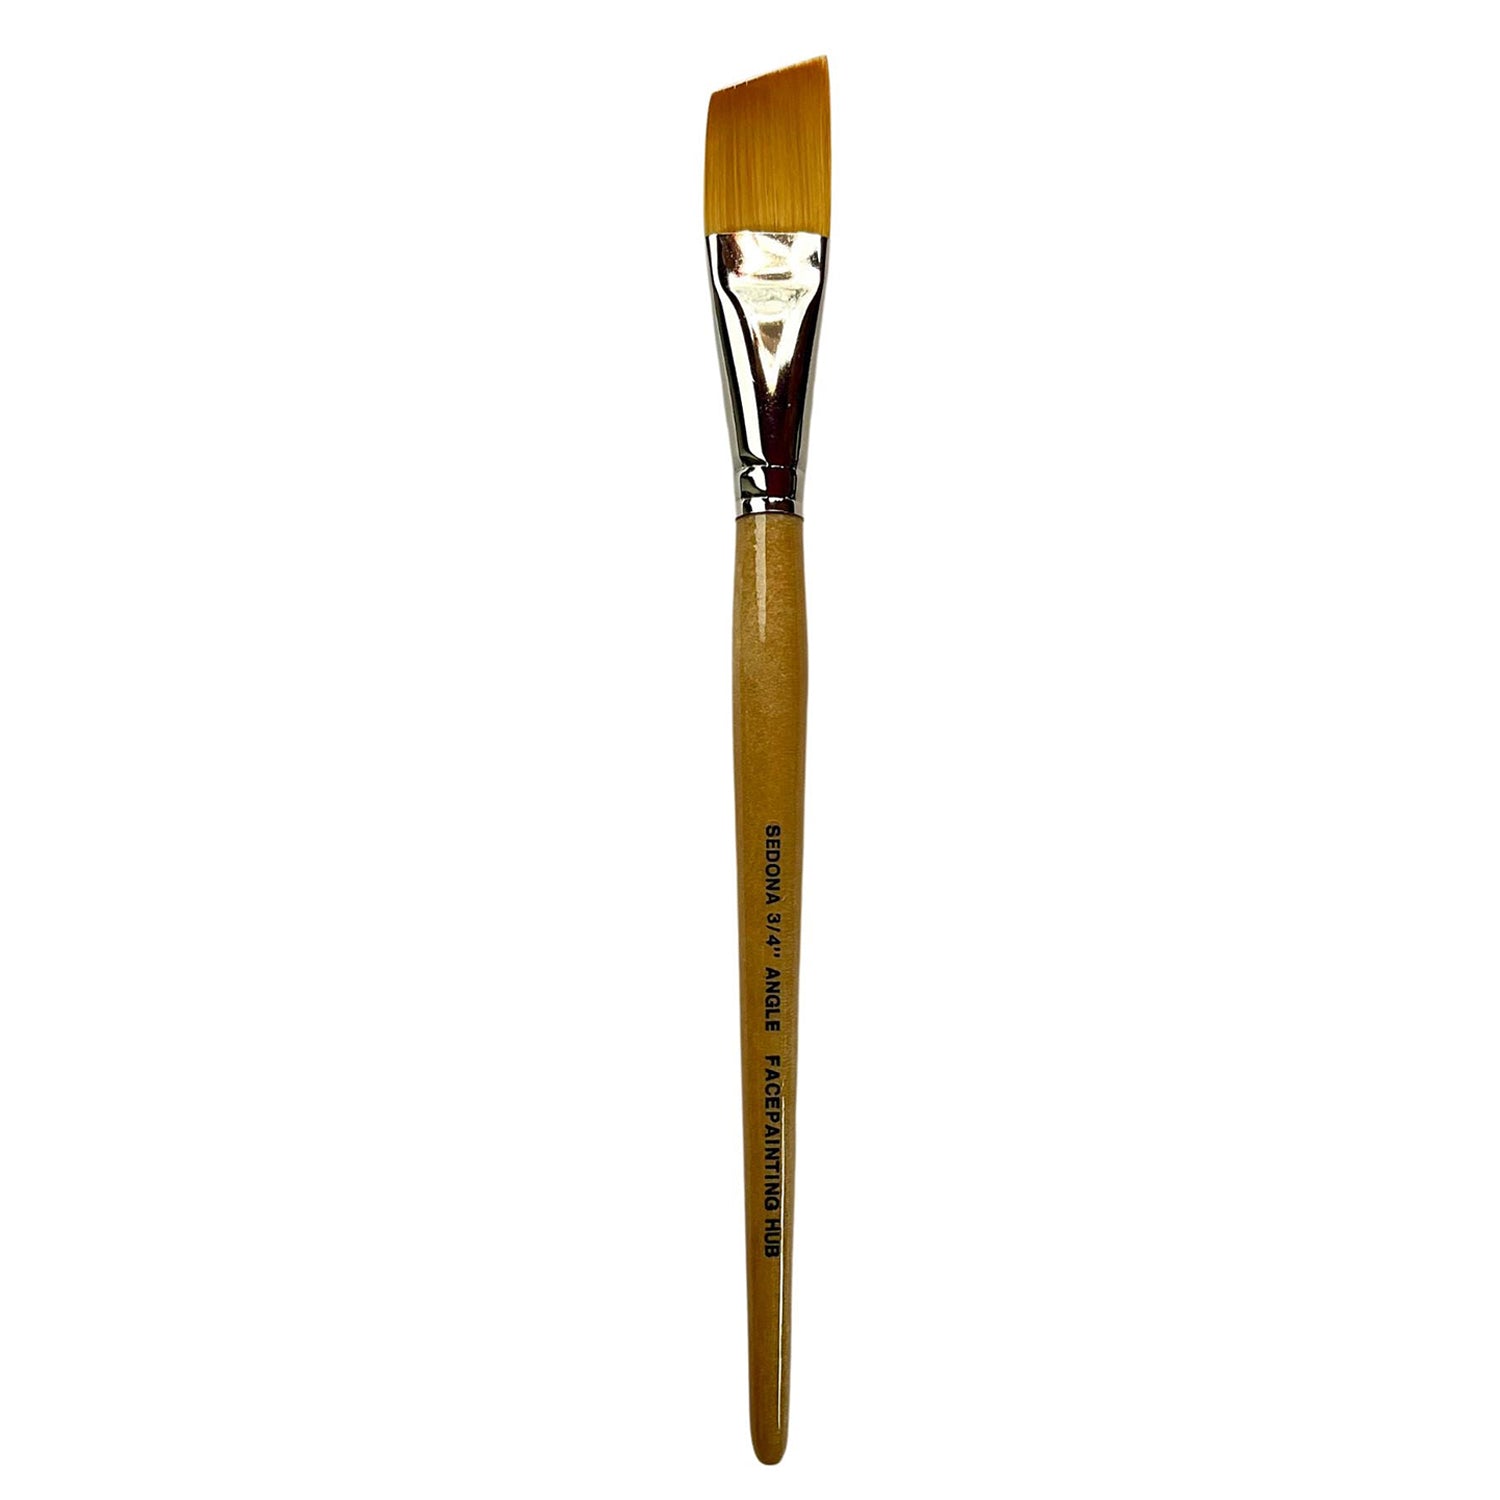 Facepainting Hub Sedona XL (3/4") Angle Brush